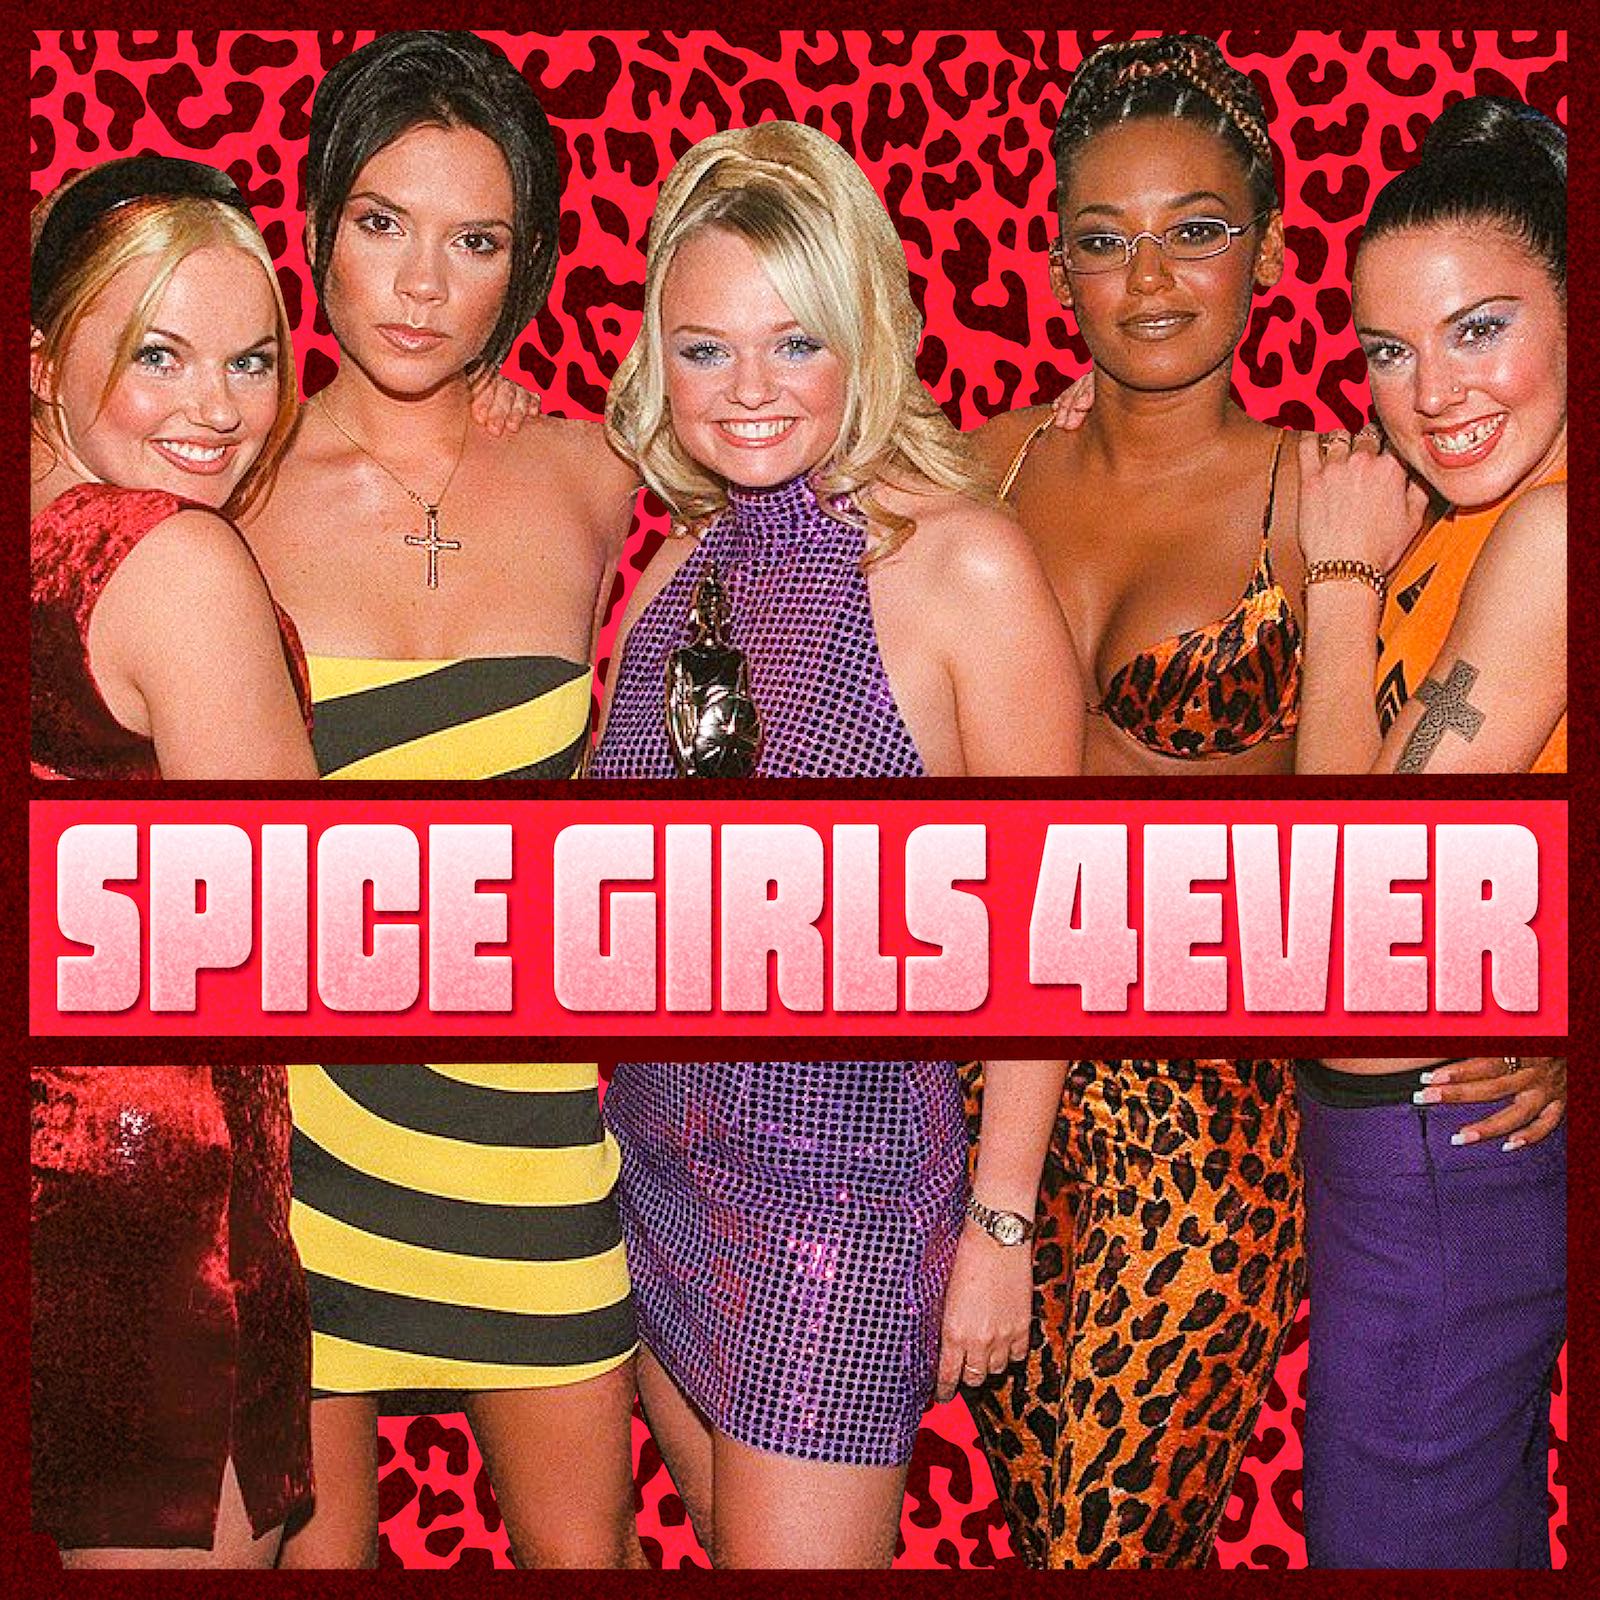 Artwork for Spice Girls 4ever